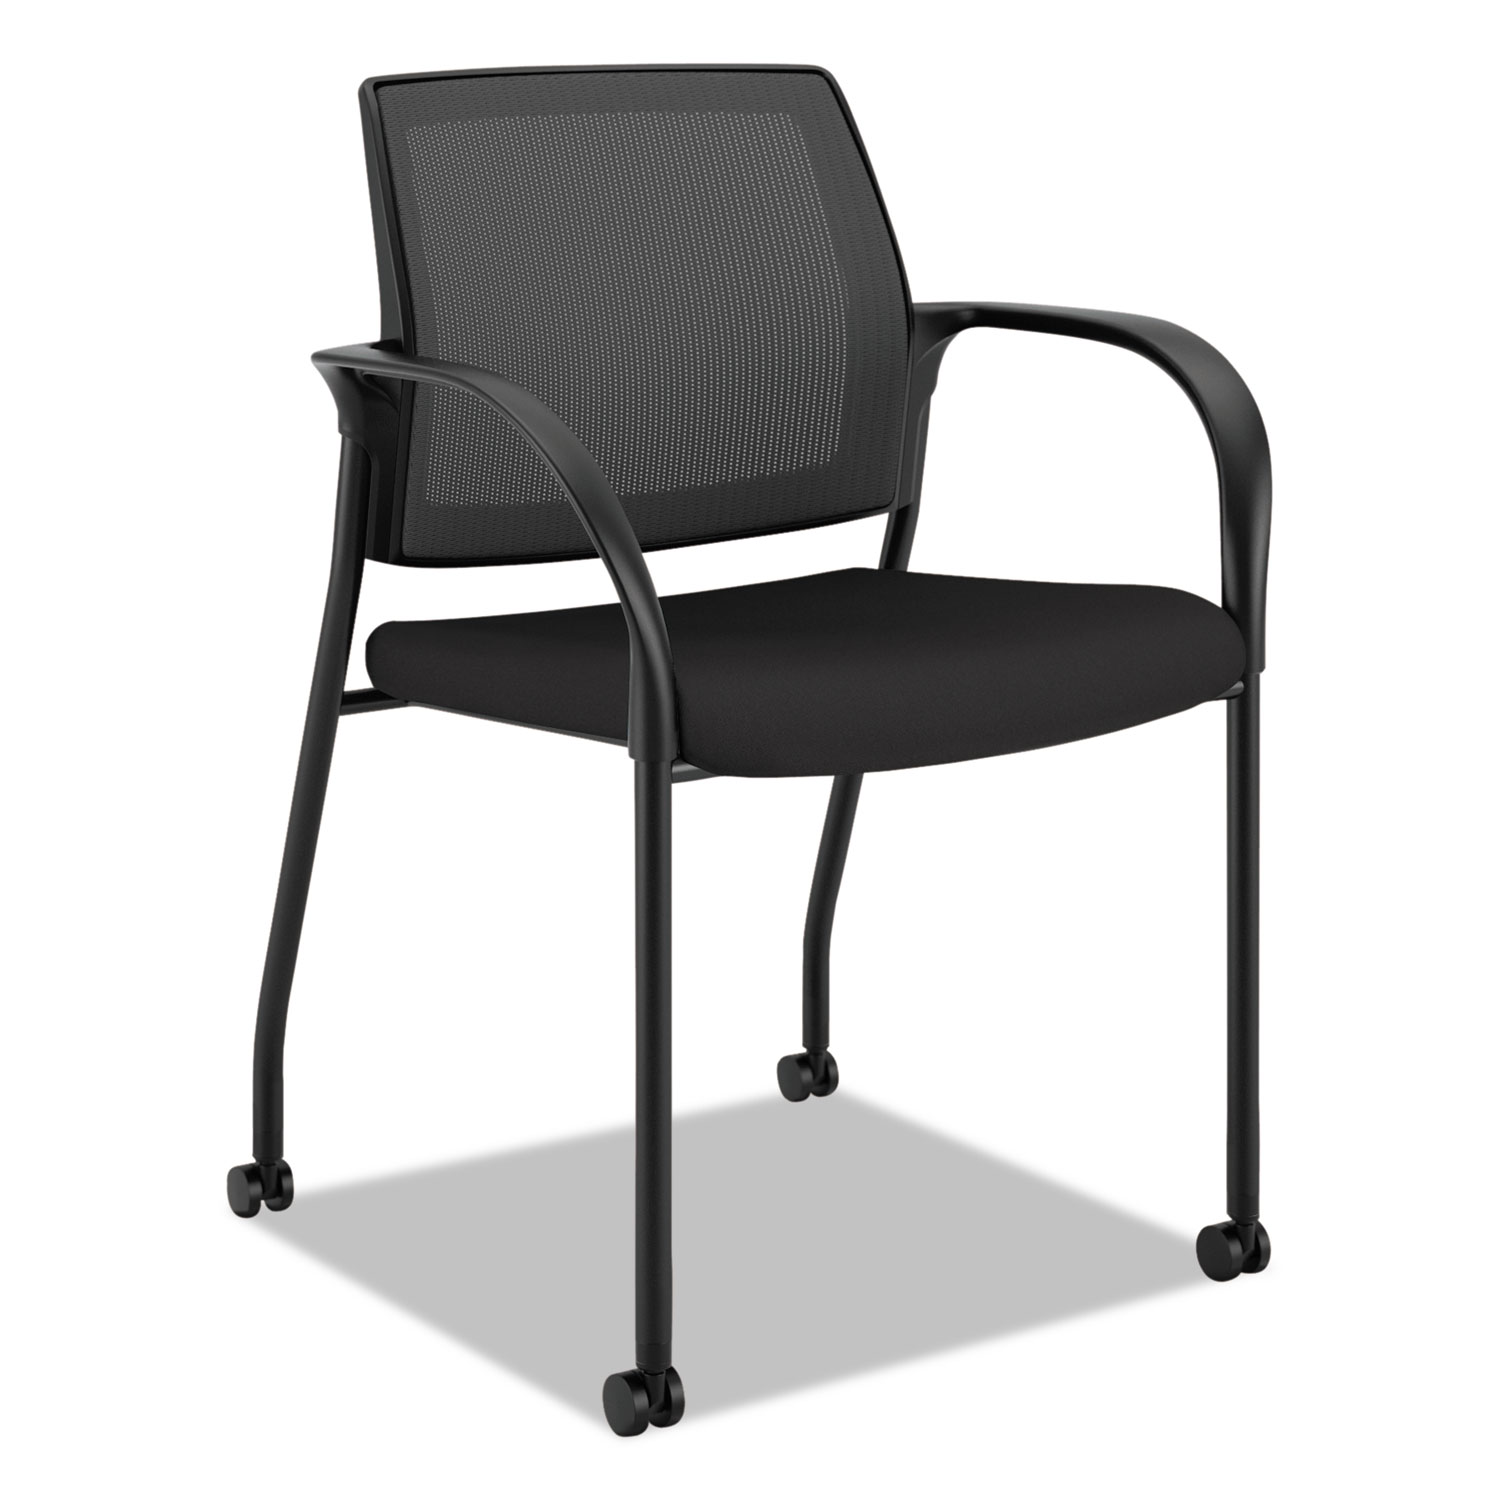  HON HIGS6.F.H.IM.CU10.T Ignition 2.0 4-Way Stretch Mesh Back Mobile Stacking Chair, Black Seat/Black Back, Black Base (HONIS107HIMCU10) 